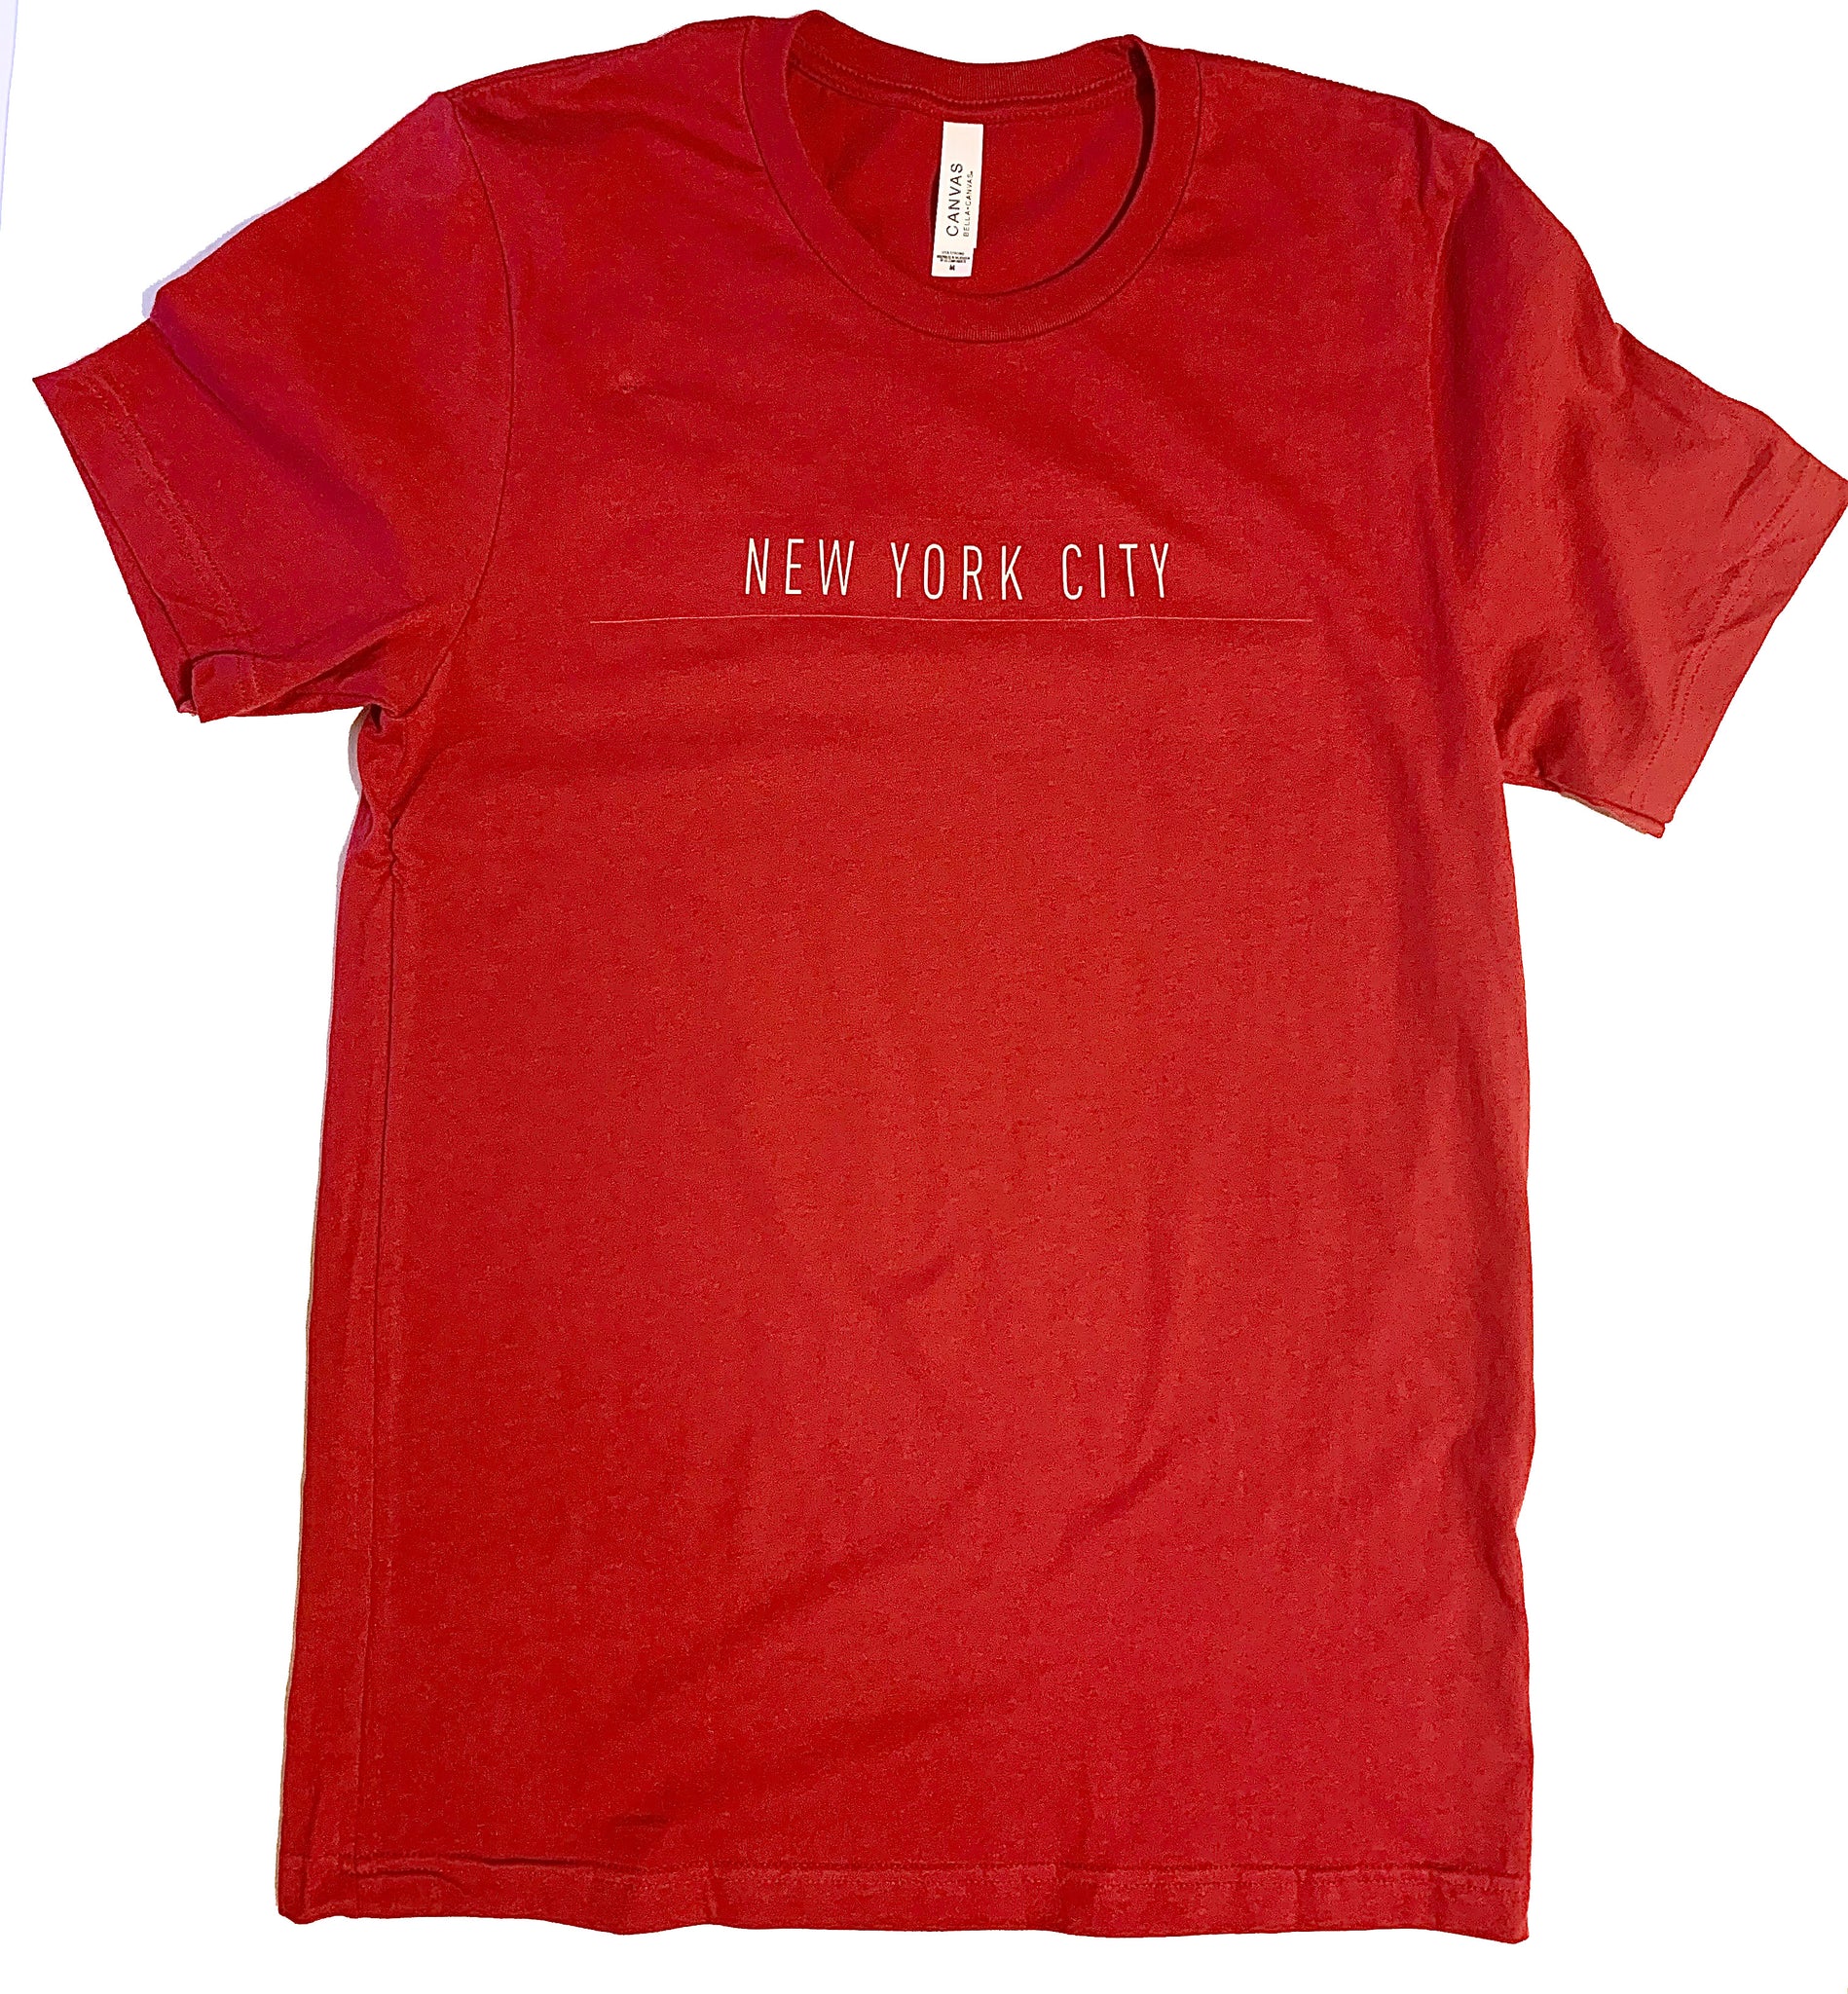 New York City Red Cotton T- shirt (Unisex)